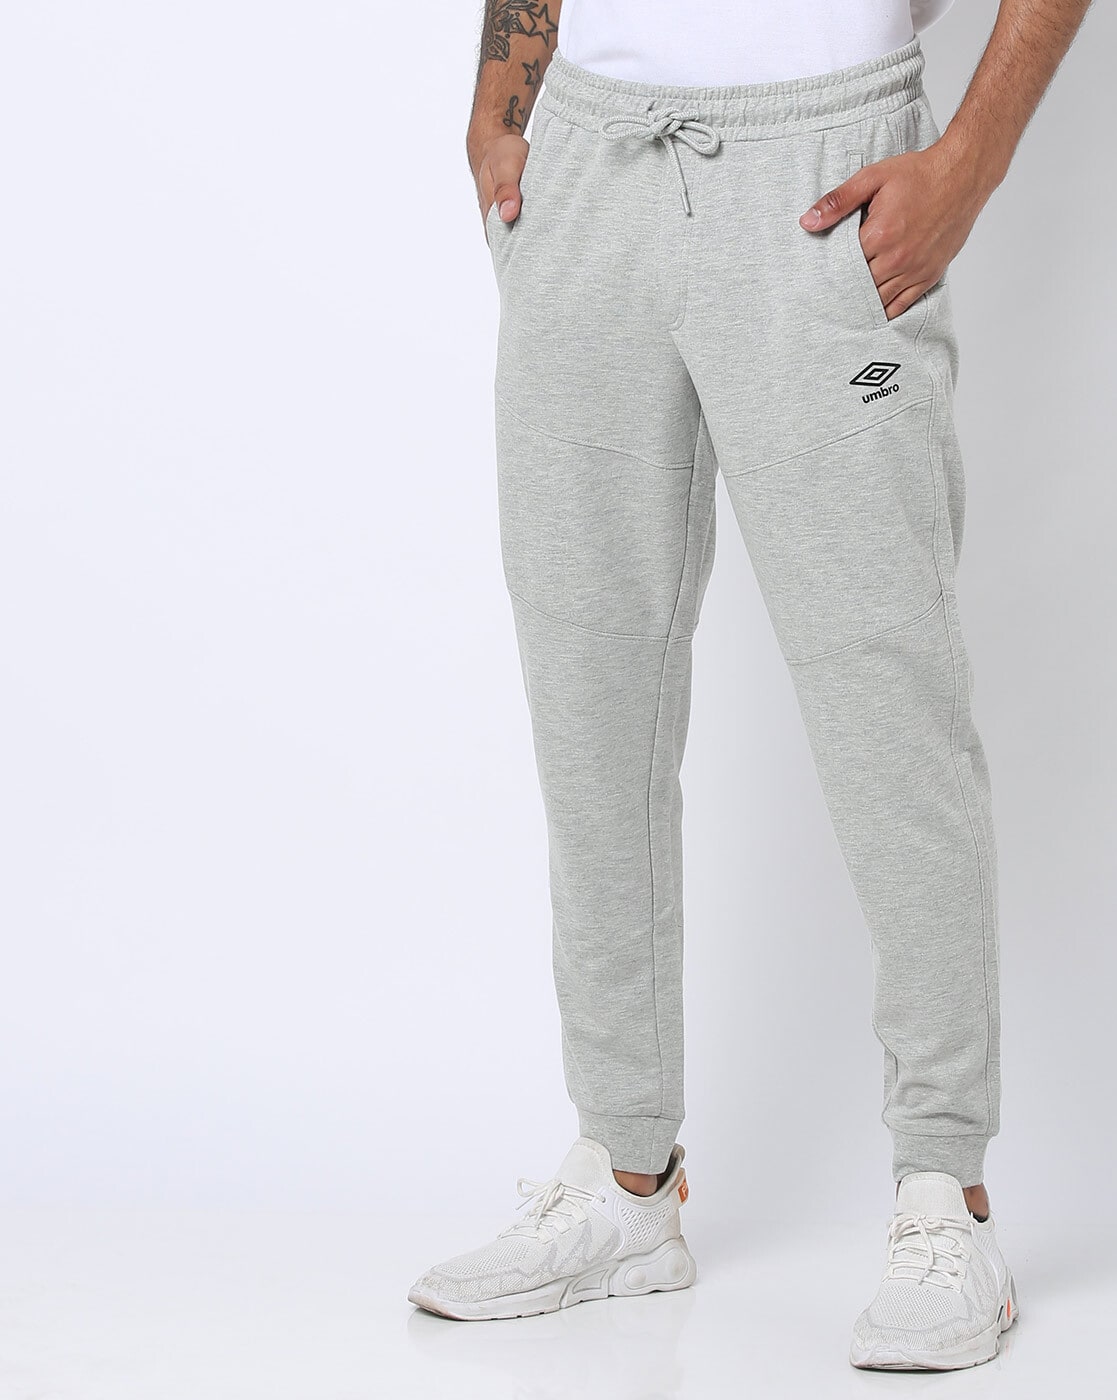 Supreme Umbro Cotton Ripstop Track Pants - Size Medium - White - NEW | eBay